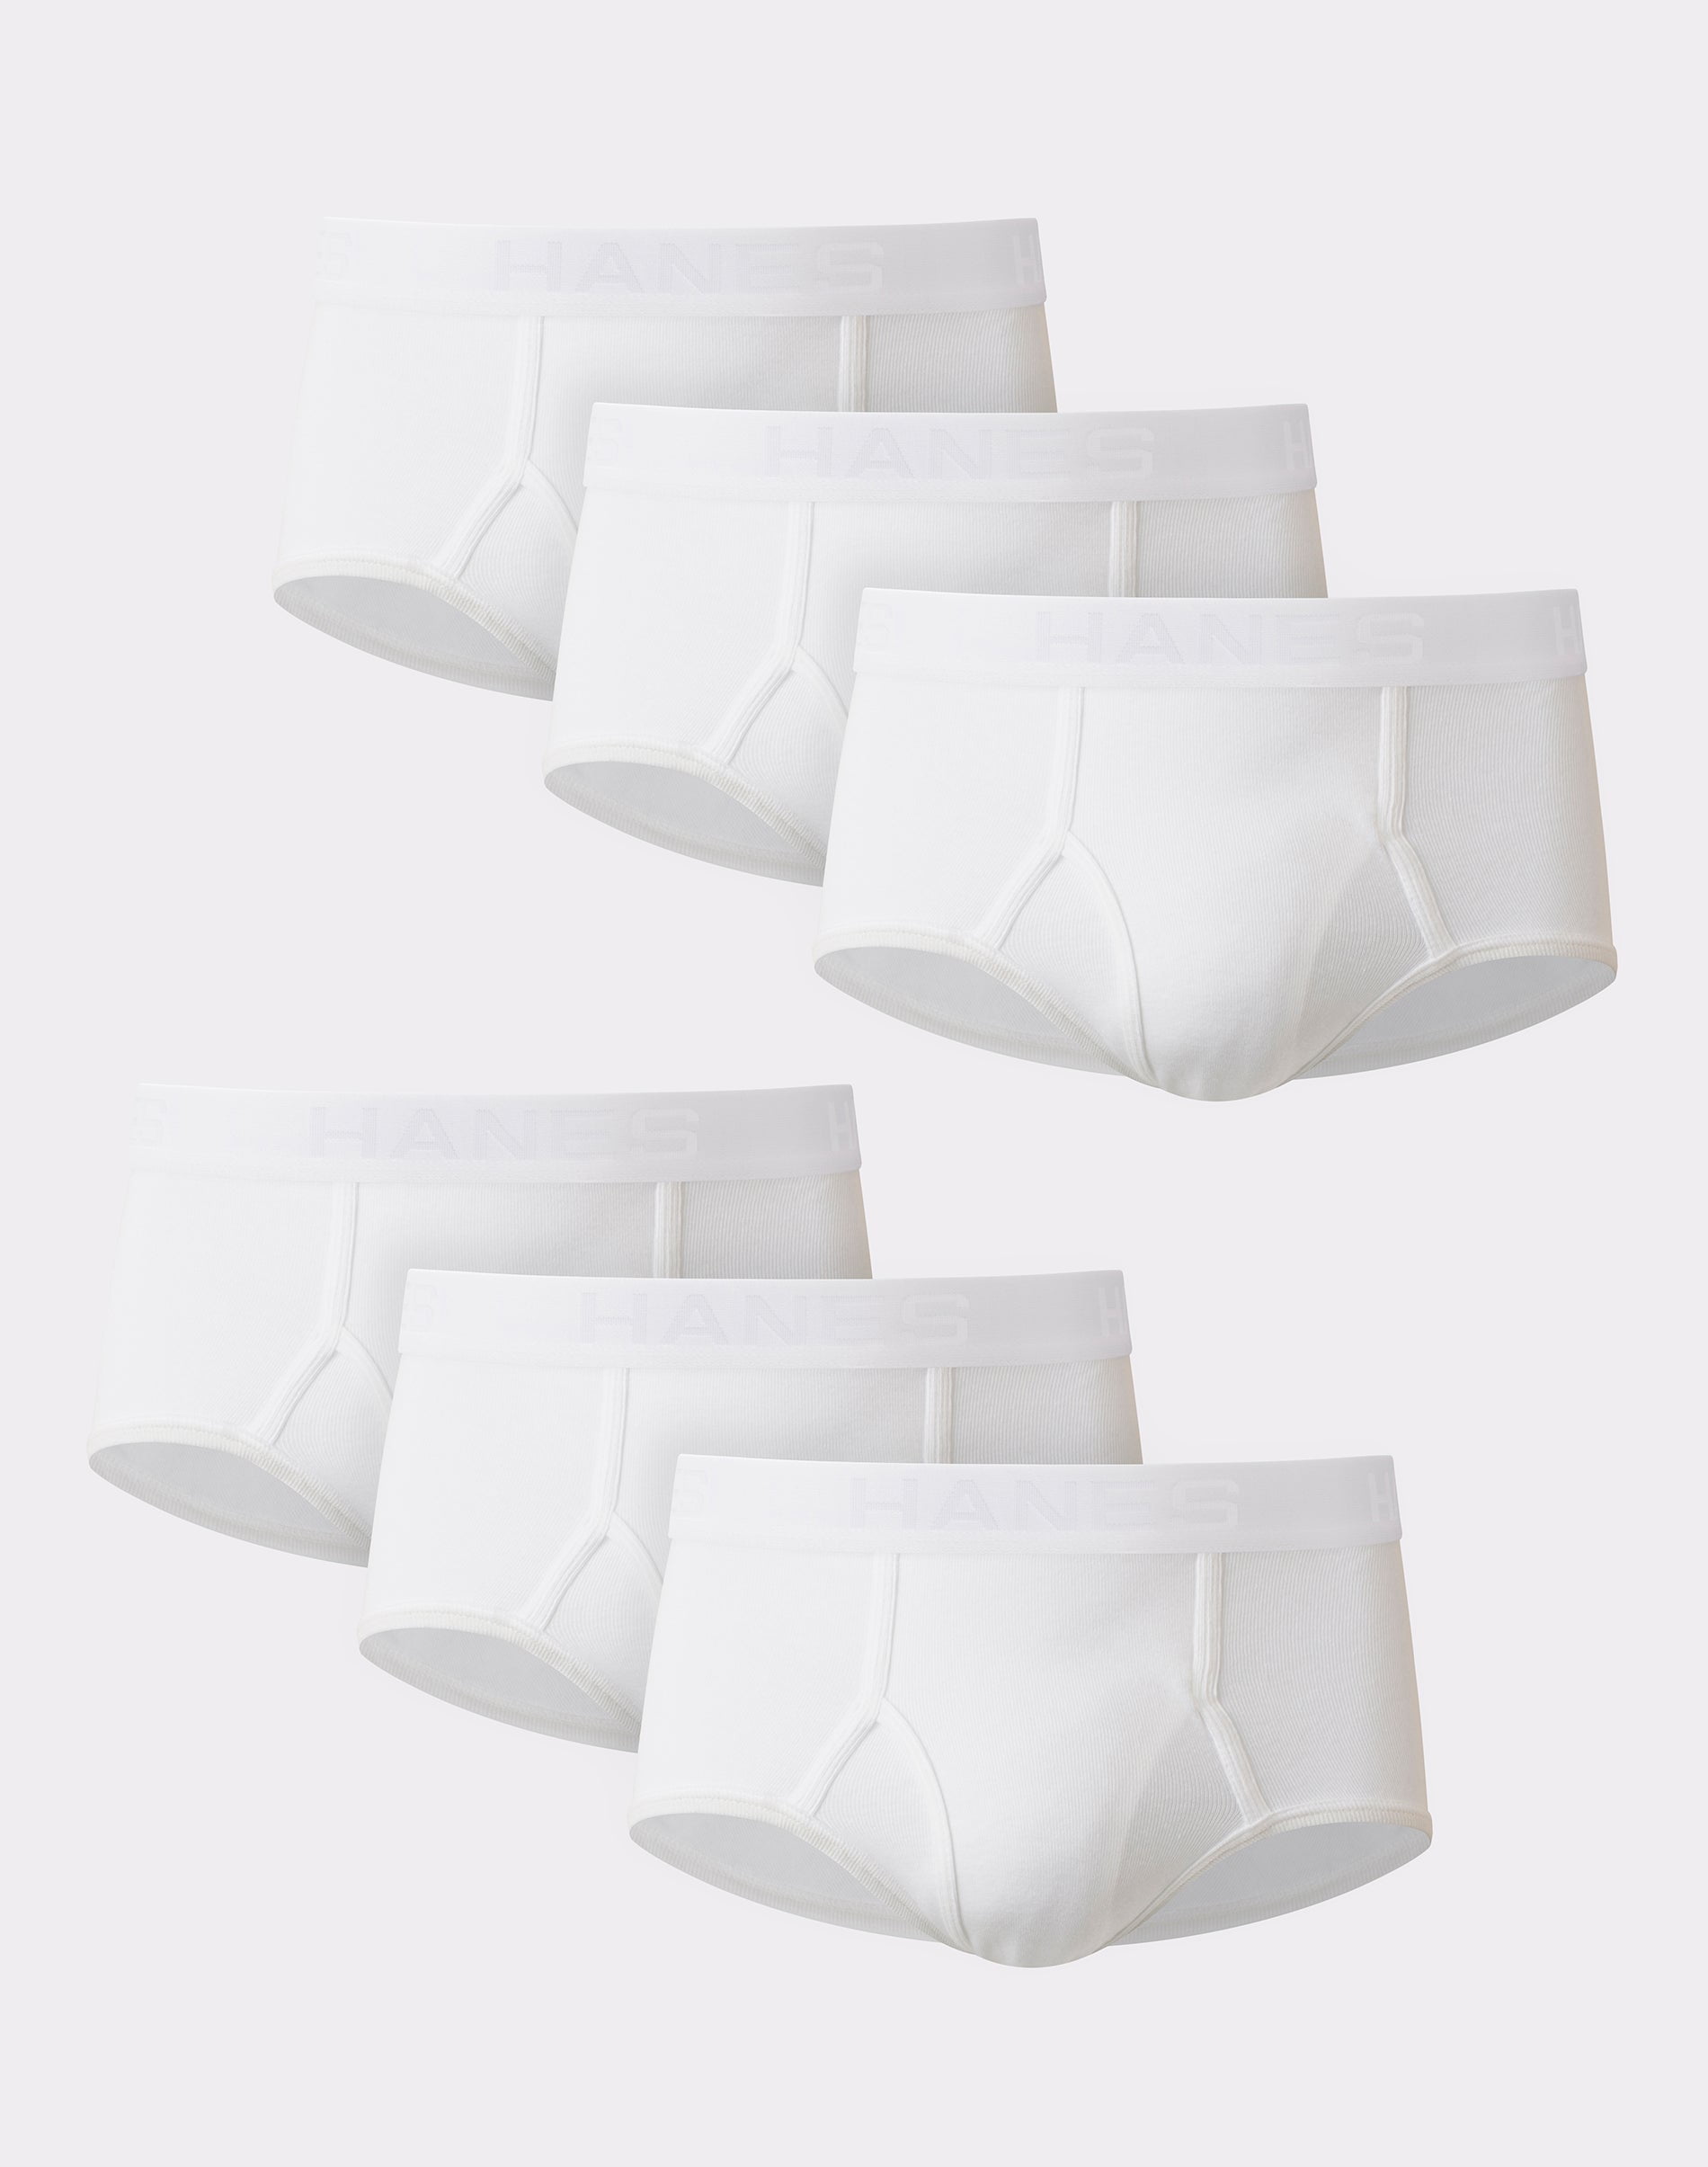 Hanes Ultimate Big Men’s White Cotton Brief Underwear, 6-Pack, ( & Tall  Sizes) 2XB